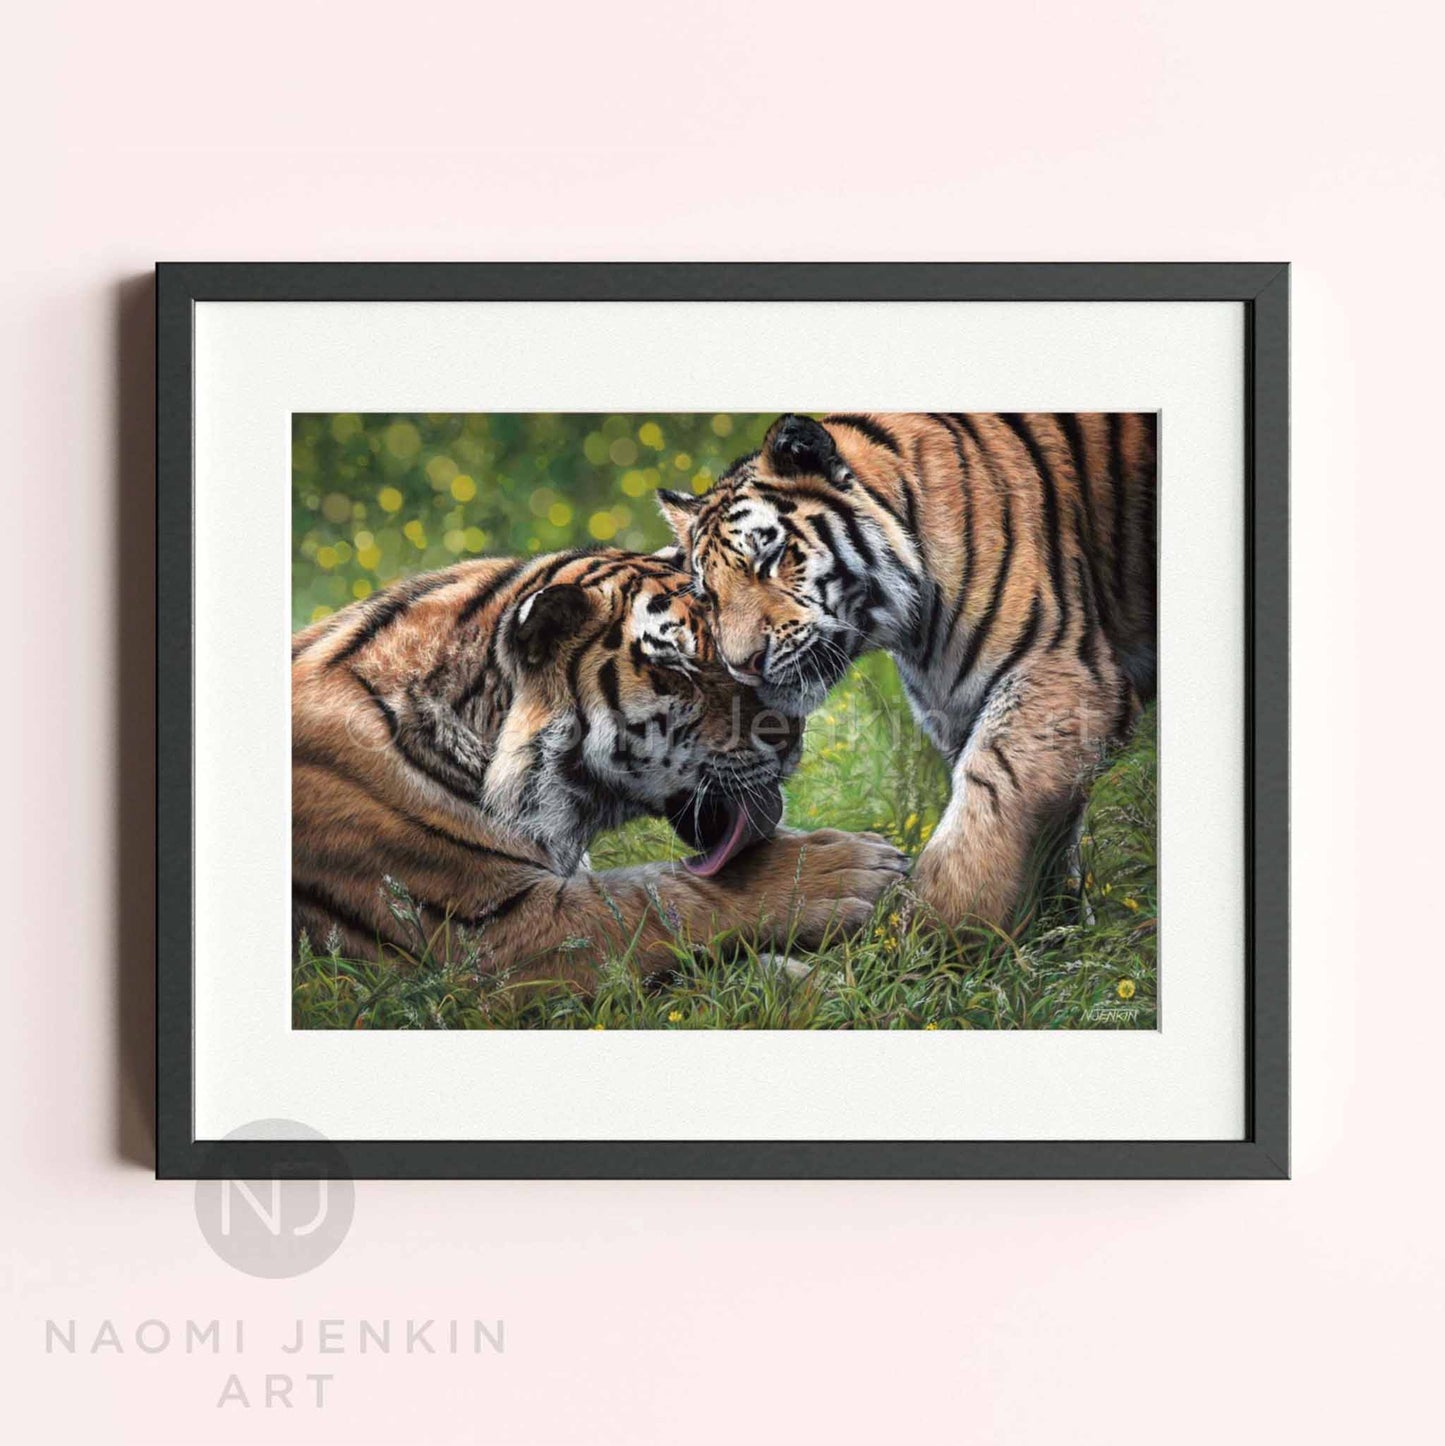 Framed tiger art print by Naomi Jenkin Art